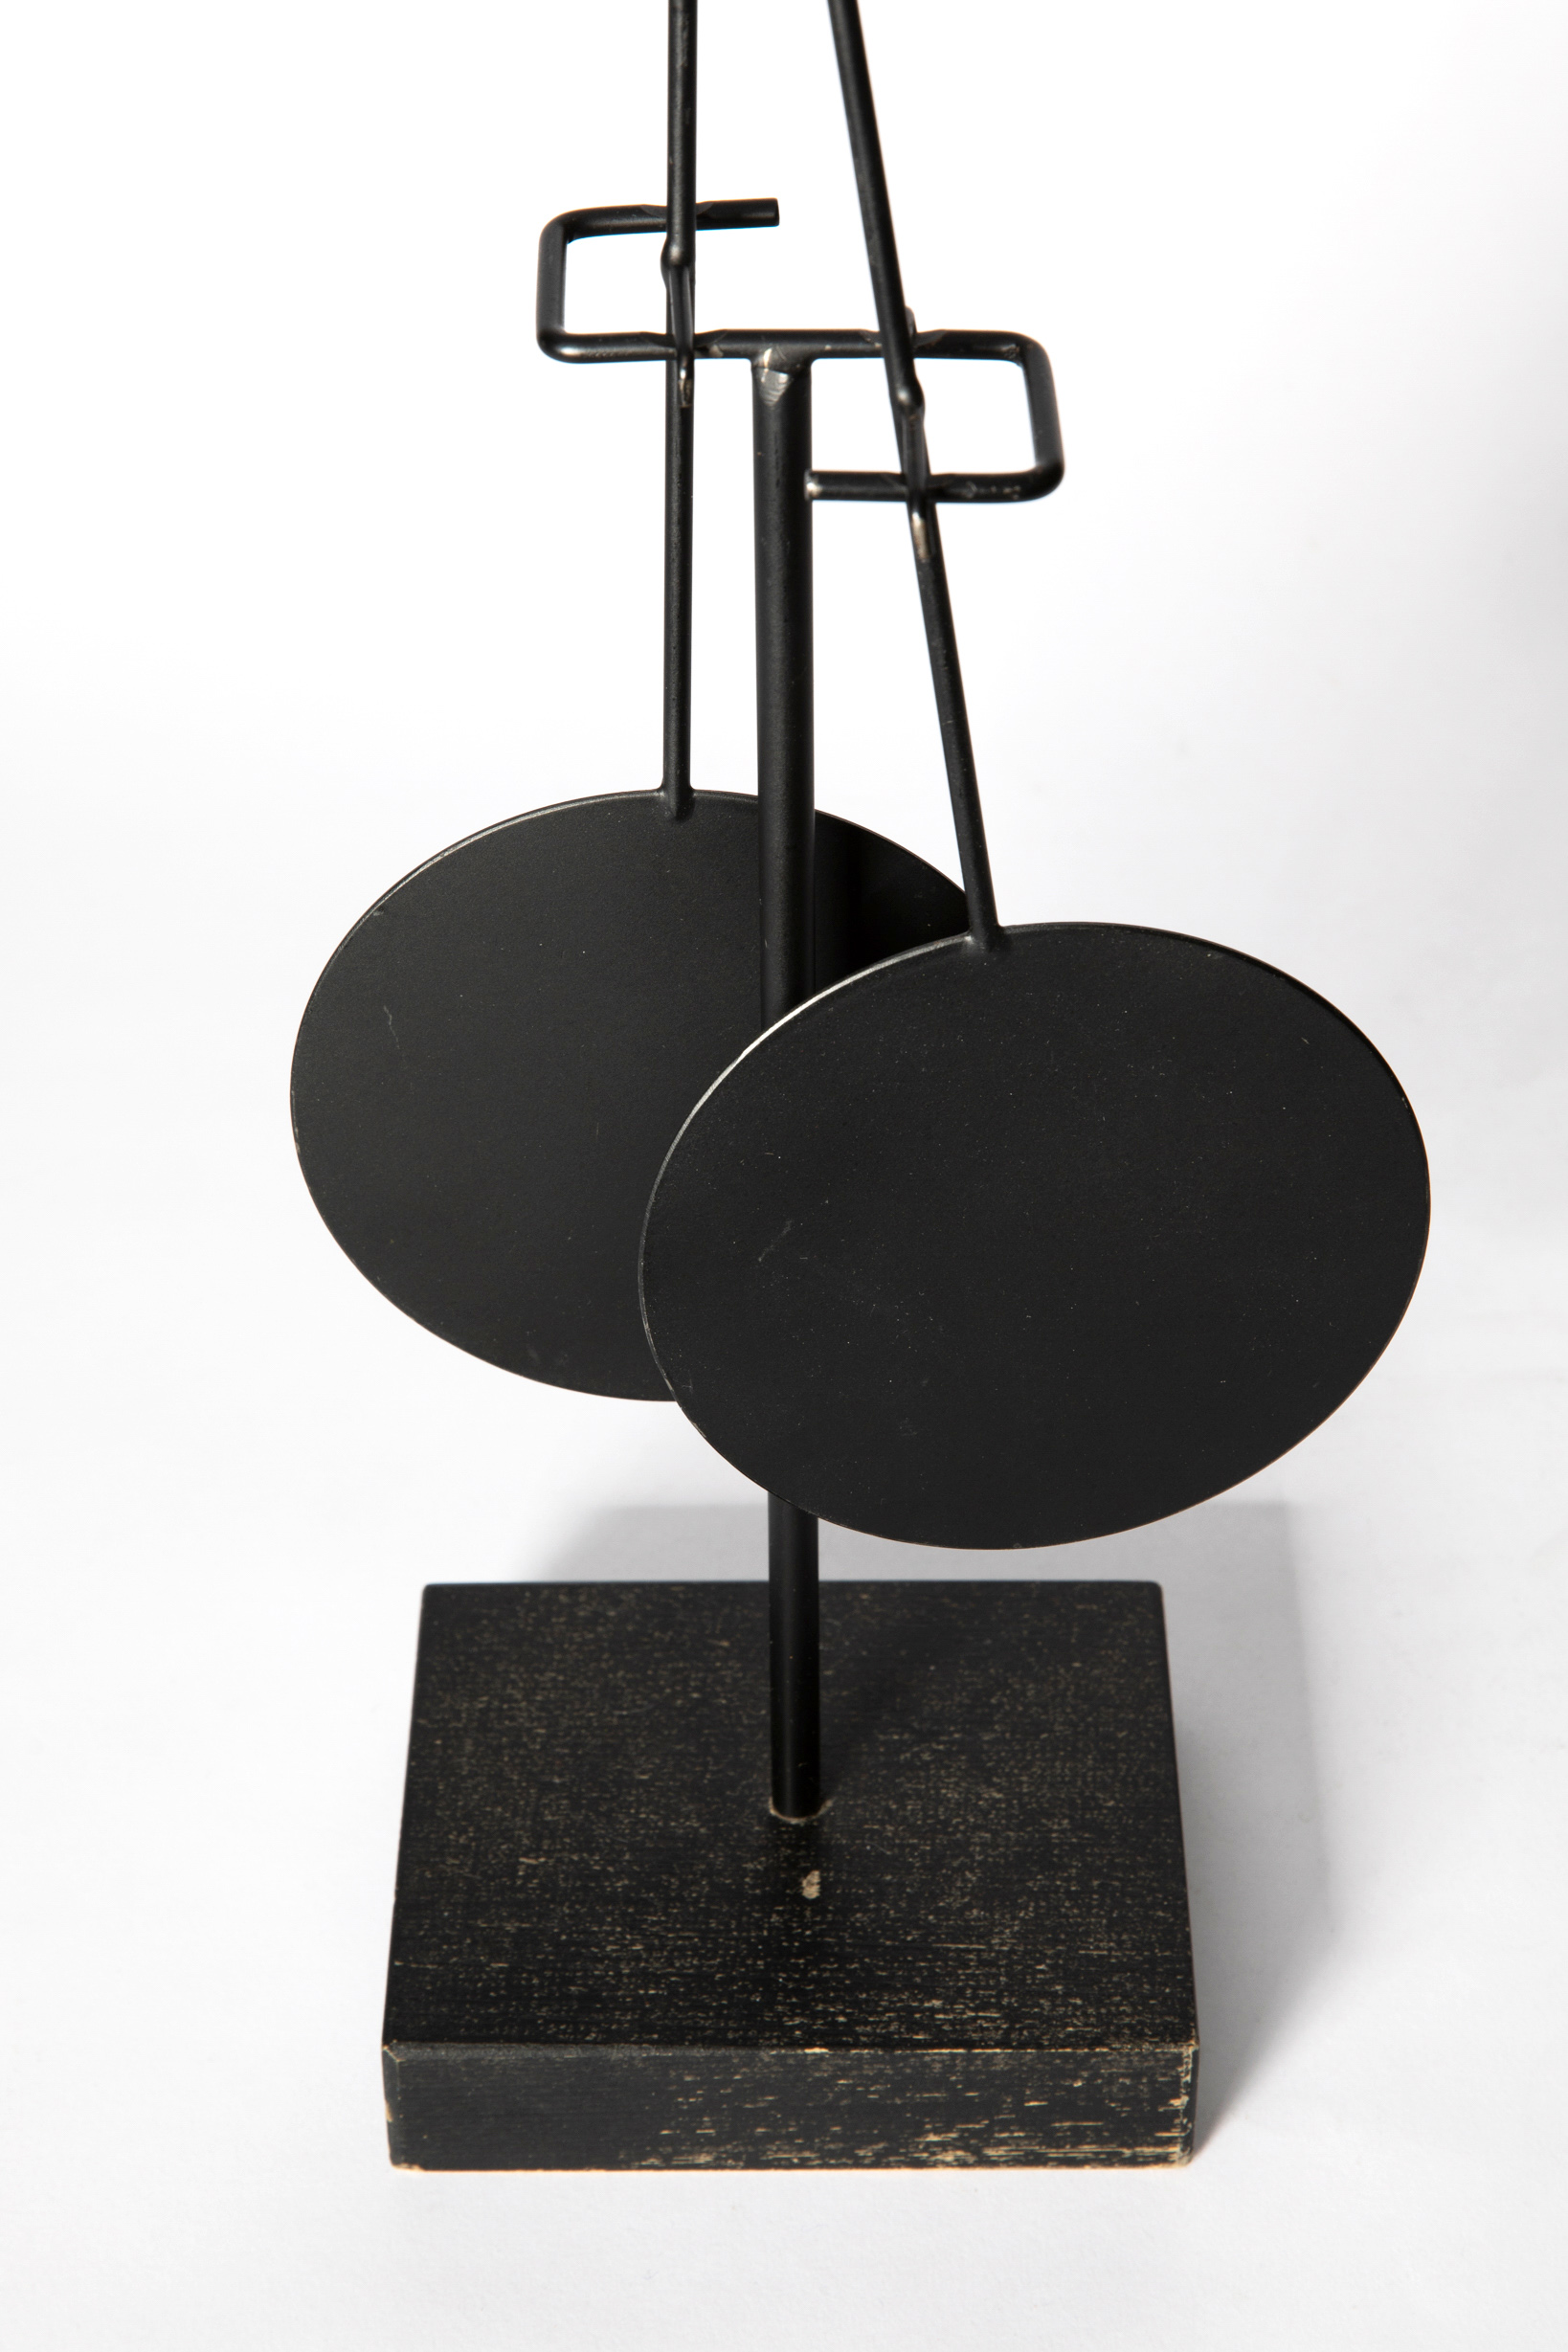 Arnulf Hoffmann, Kinetic Sculpture / Pendulum Object, 1985 - Image 4 of 6